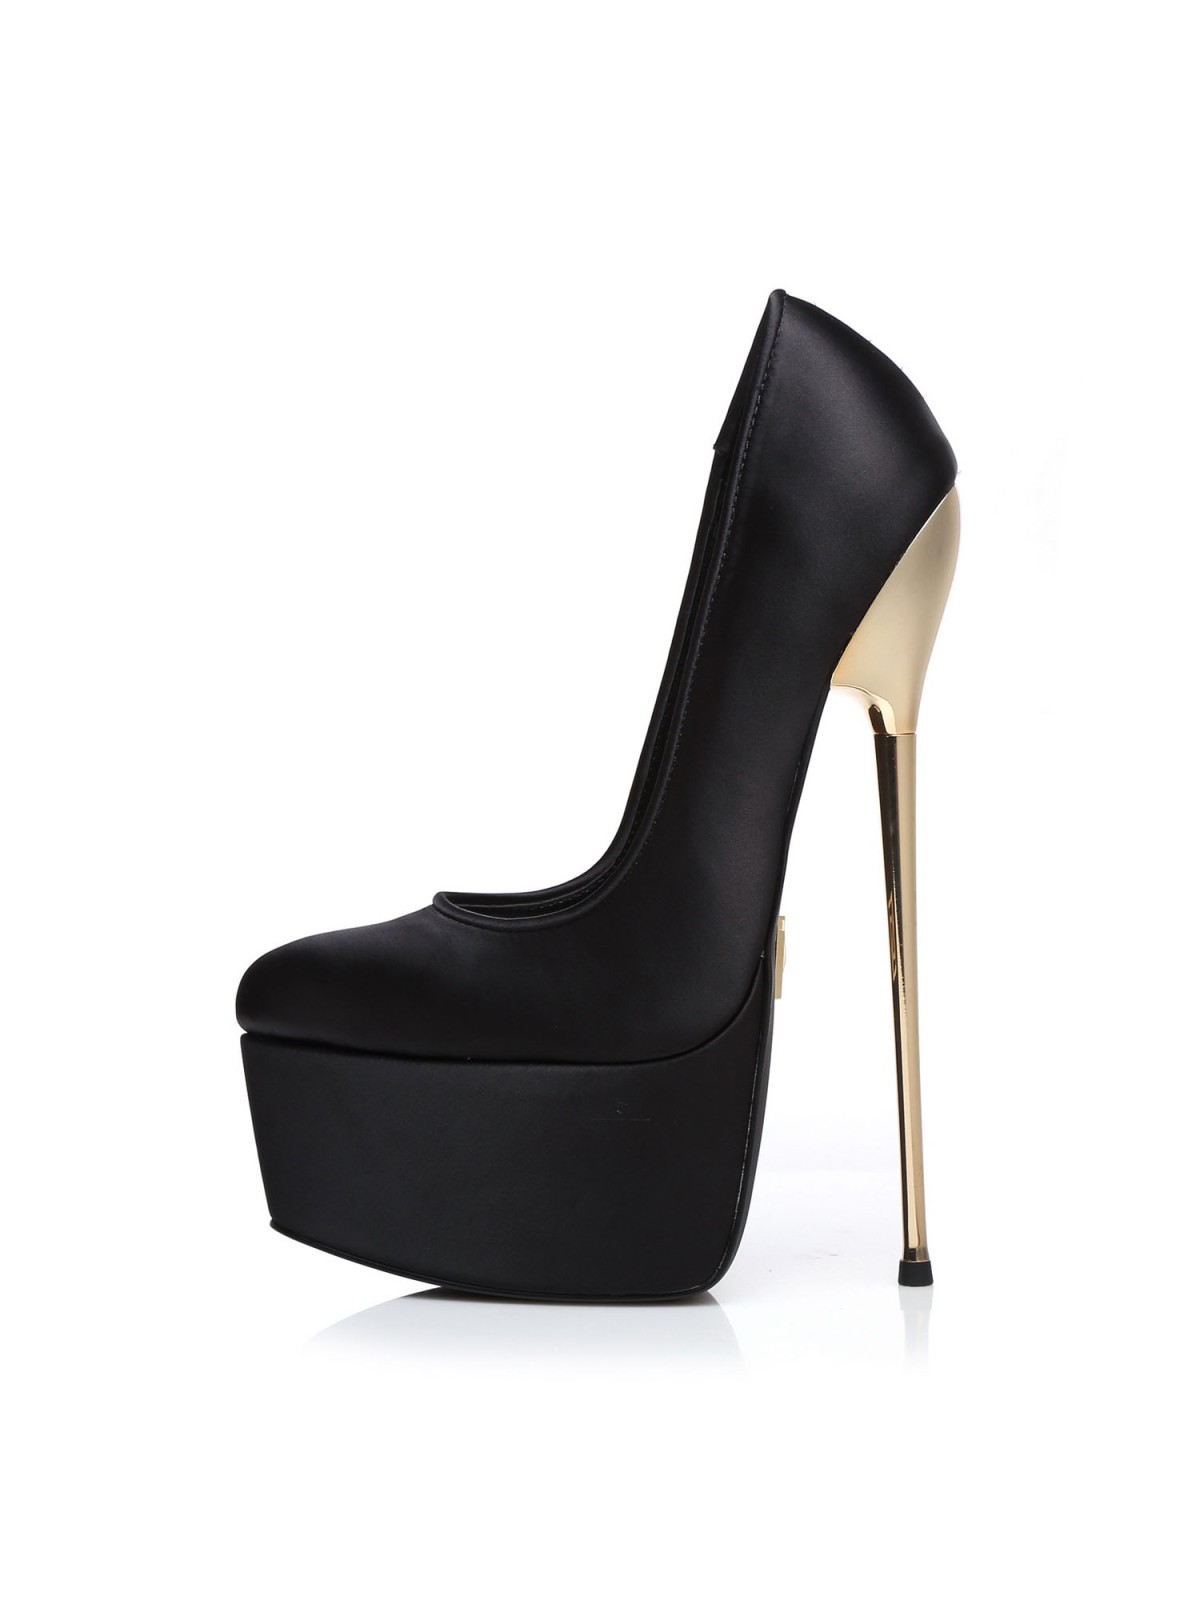 High heels. Very high indeed. Because... - Giovanni Fabiani | Facebook-hdcinema.vn